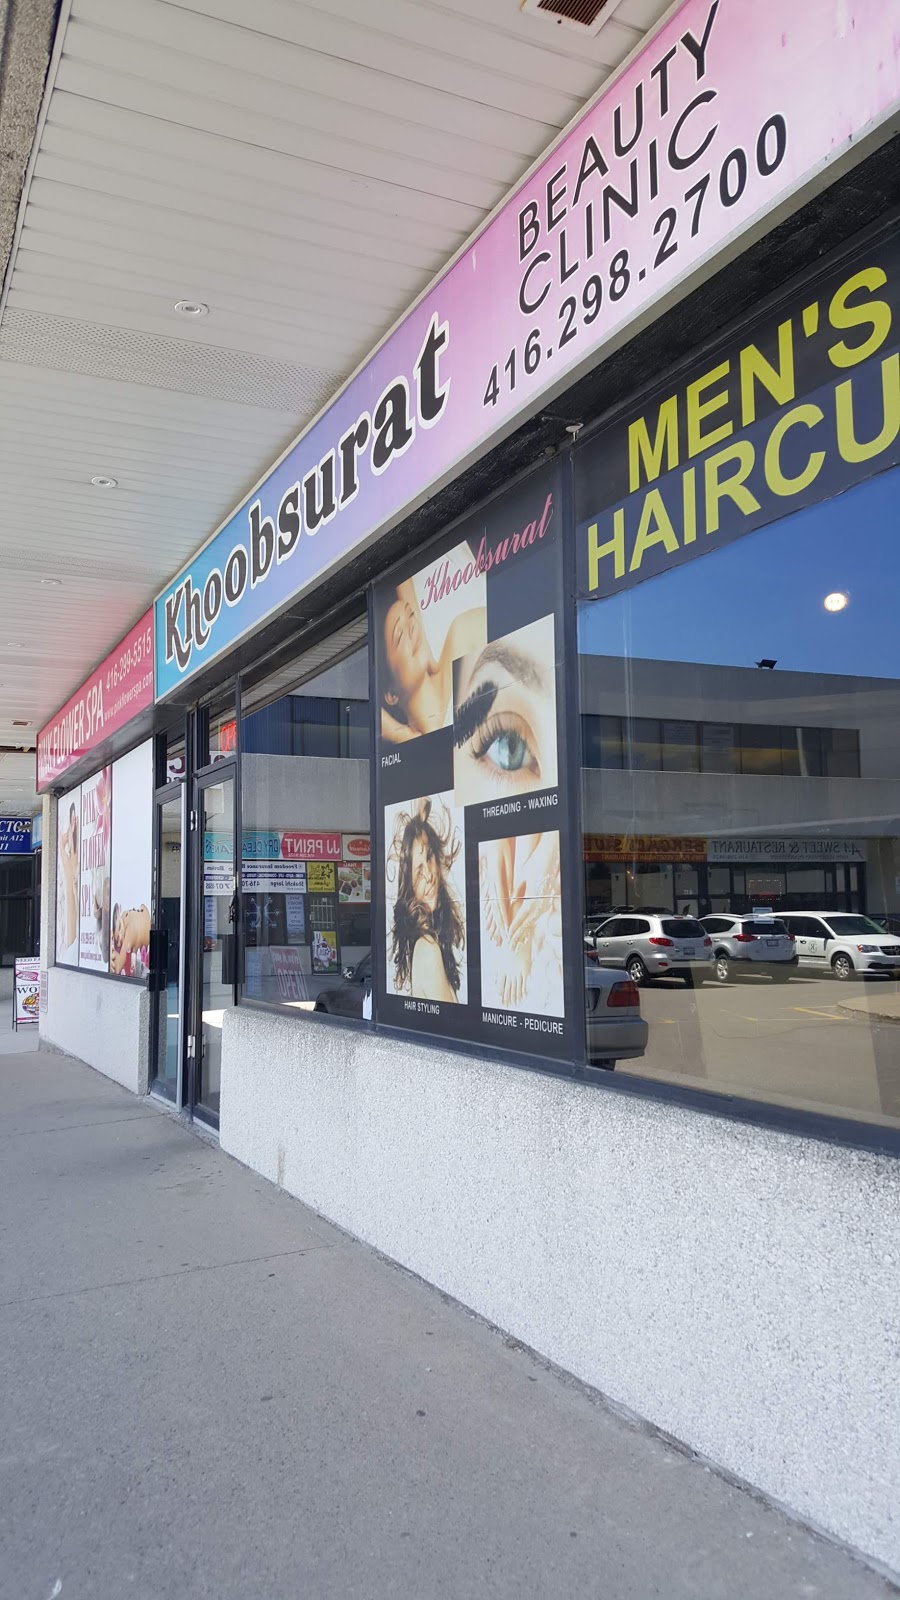 Khoobsurat Beauty Salon | 3300 McNicoll Ave unit a7, Scarborough, ON M1V 5J6, Canada | Phone: (416) 298-2700